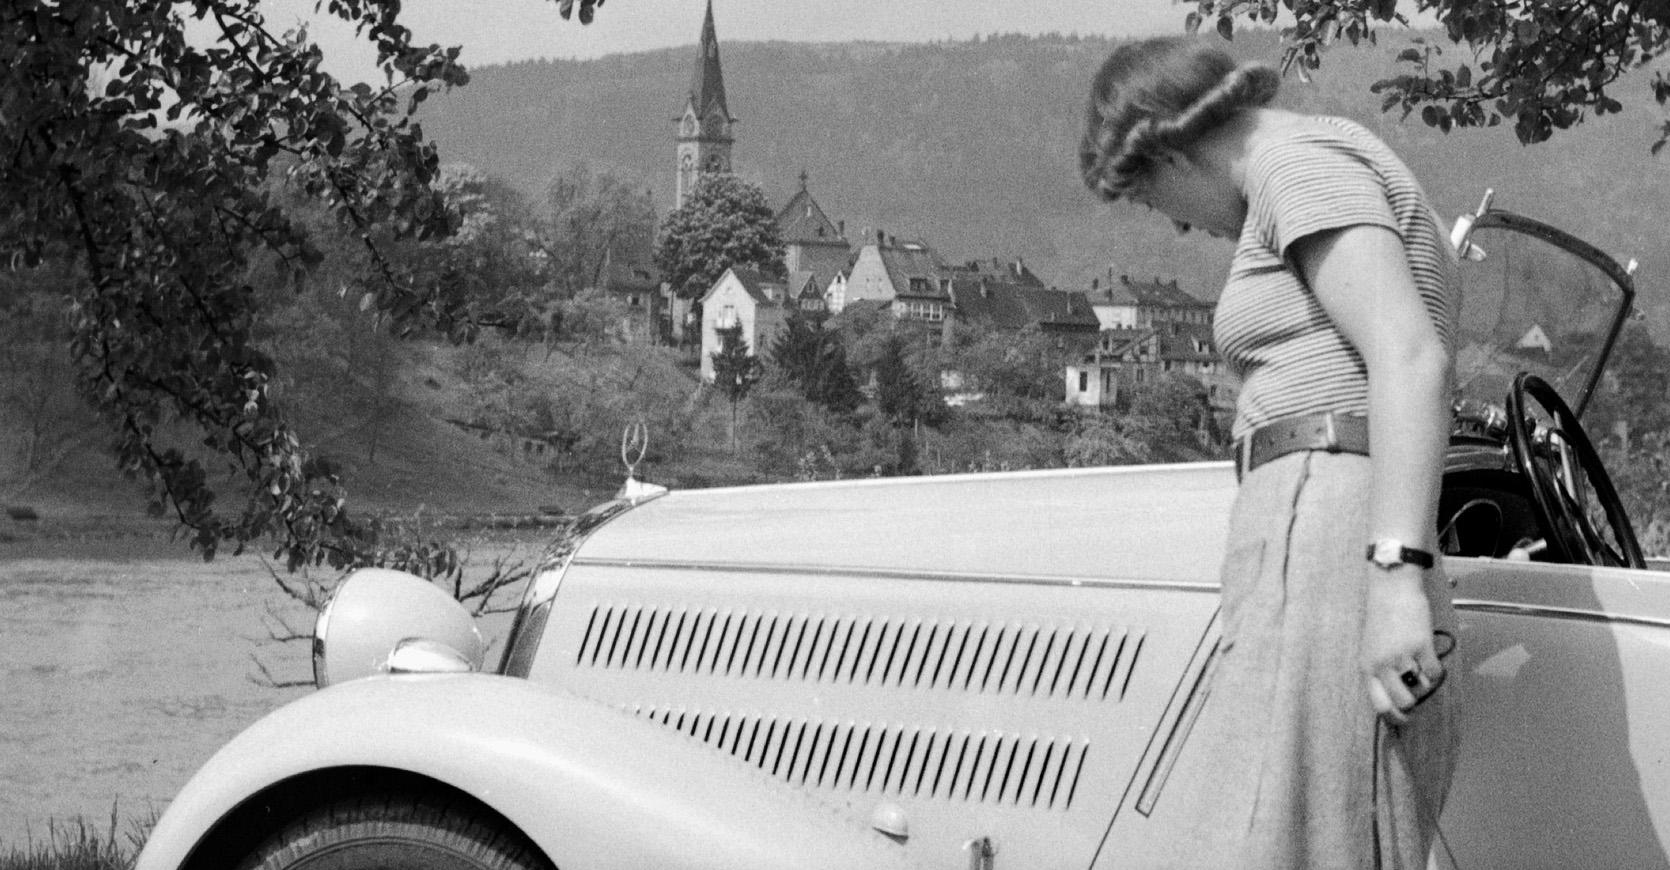 voiture Mercedes Benz de Neckargemuend près de Heidelberg, Allemagne 1936, imprimée plus tard  - Photograph de Karl Heinrich Lämmel